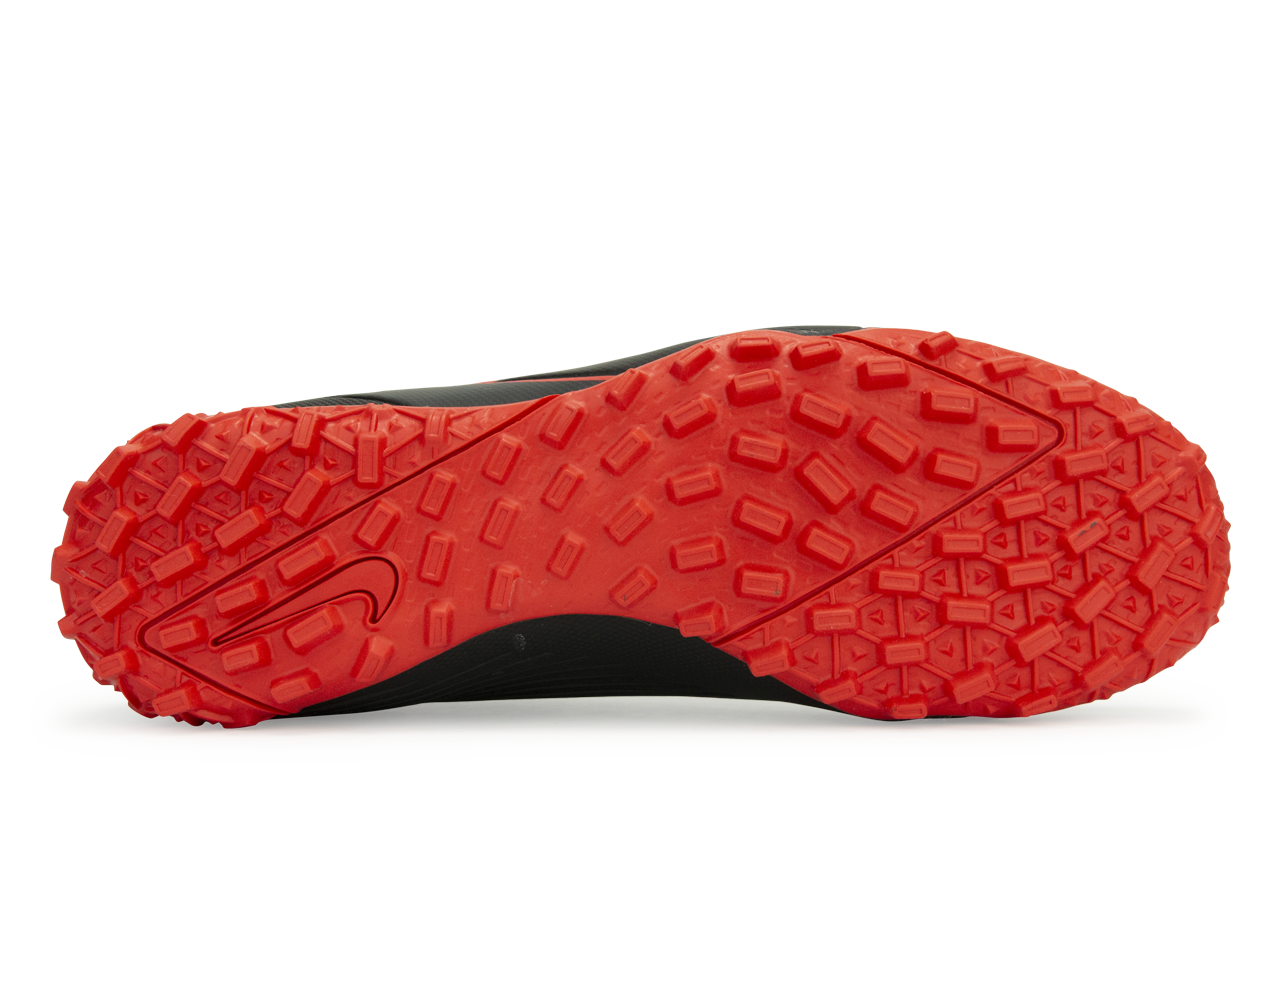 Nike Men's Mercurial Vapor 13 Academy Turf Soccer Shoes Black/Chile Red